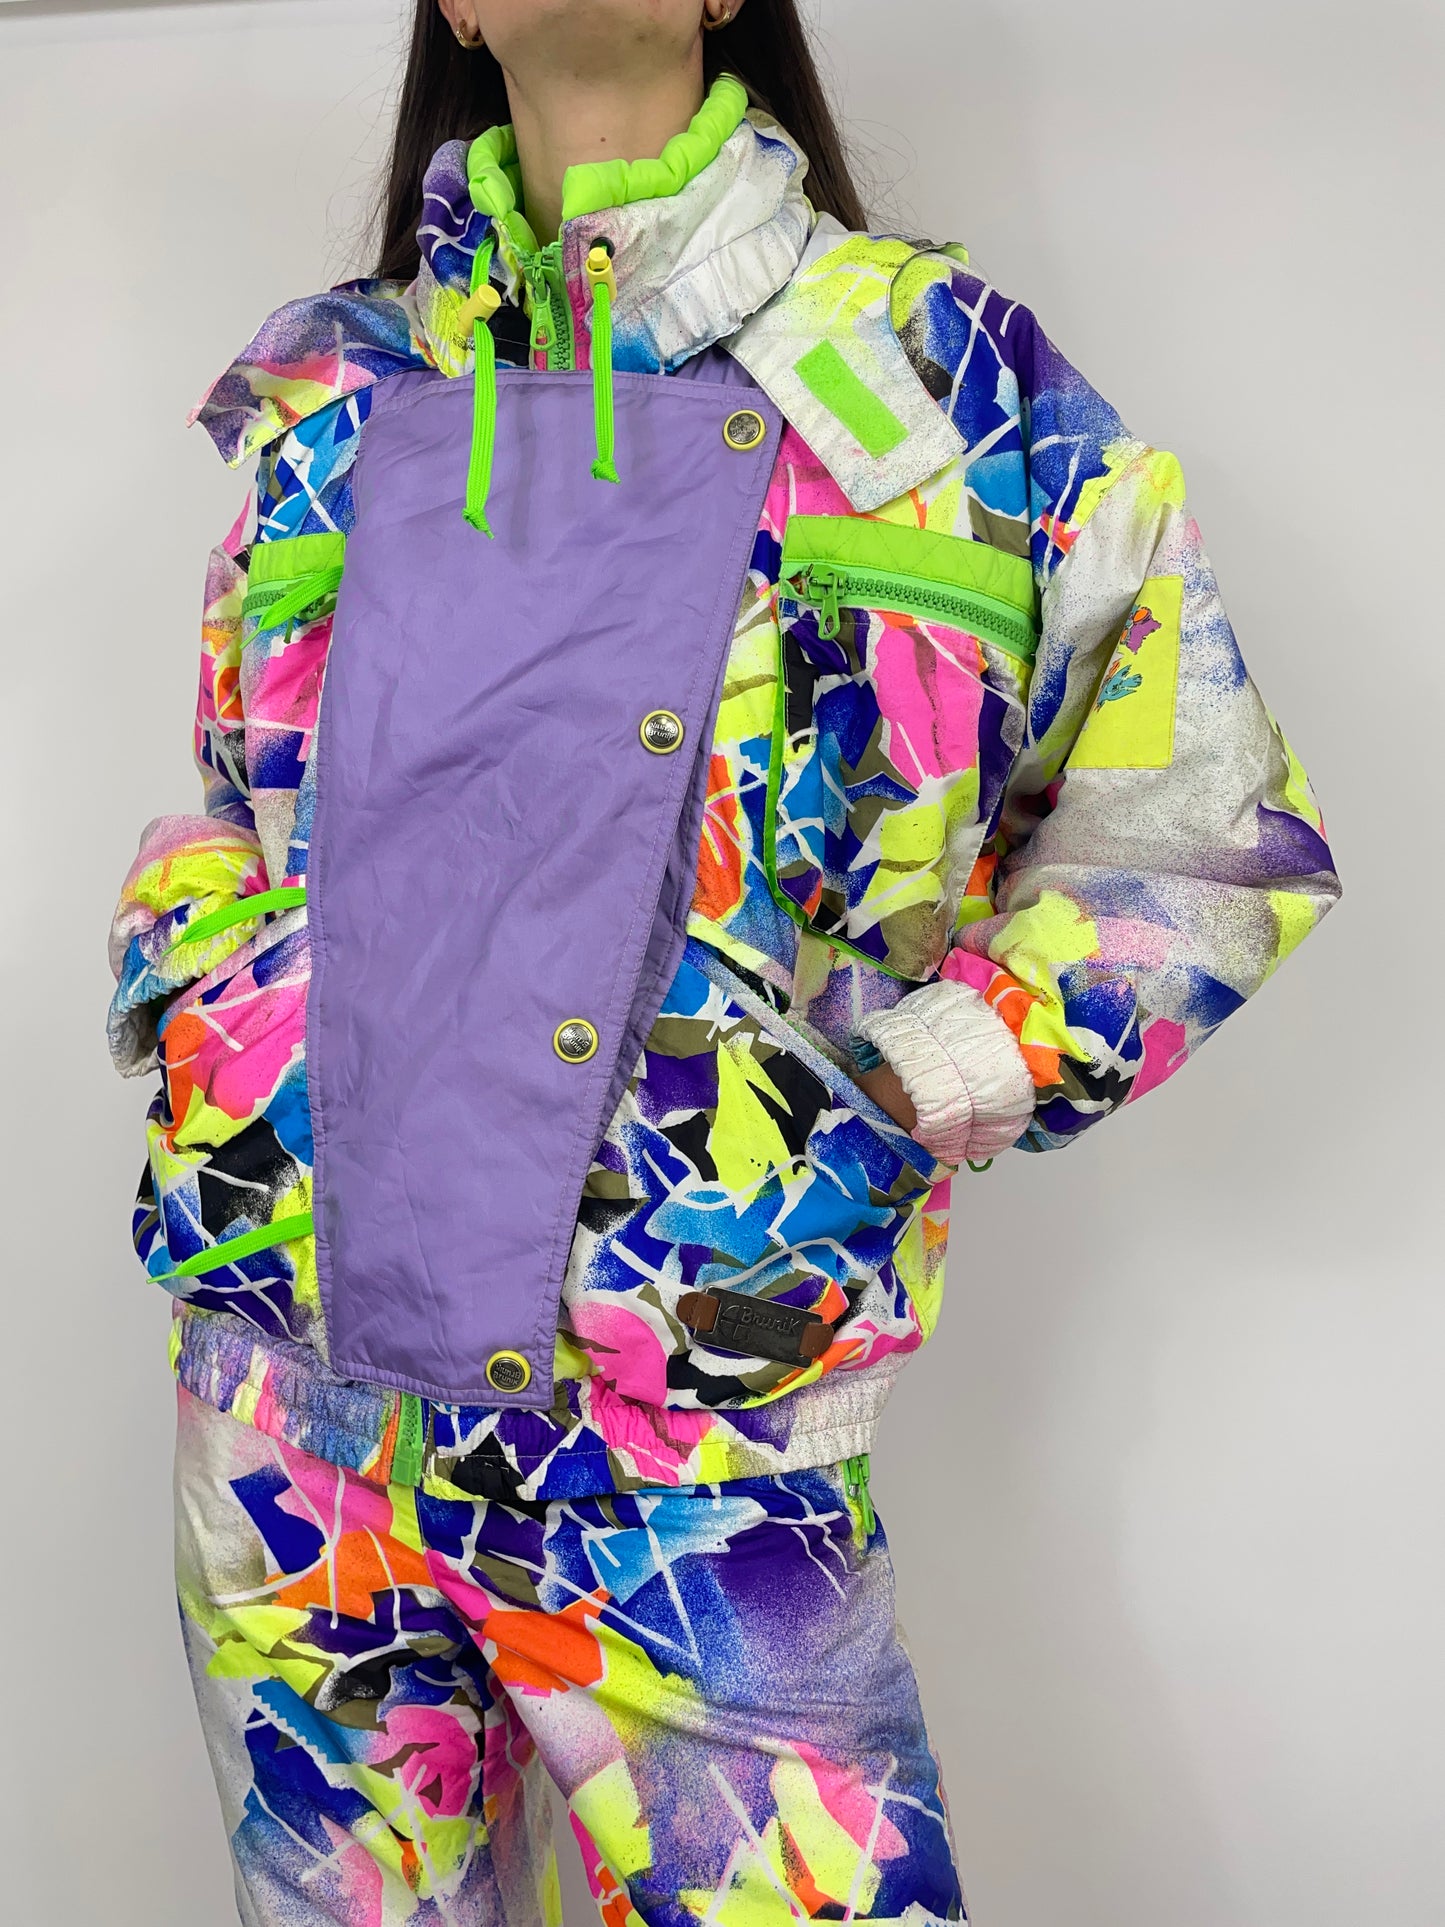 Brunik 1990s ski suit